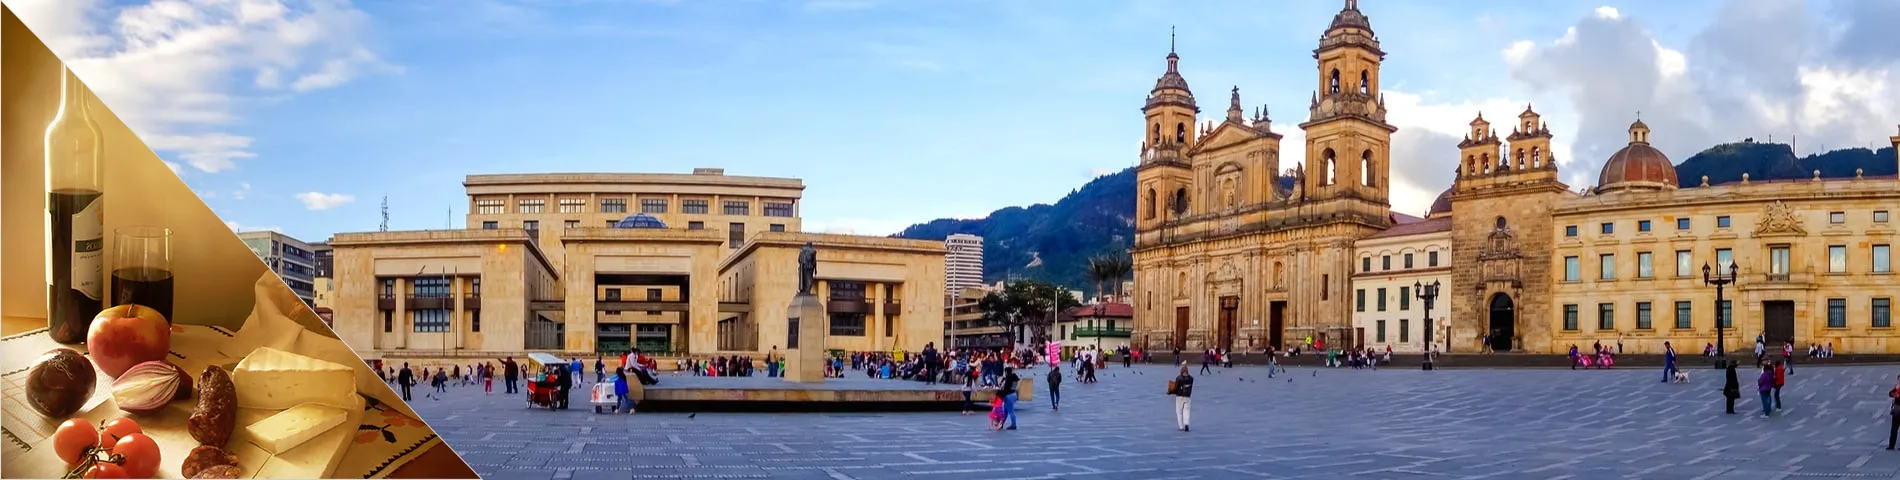 Bogotà - Espanyol i Cultura